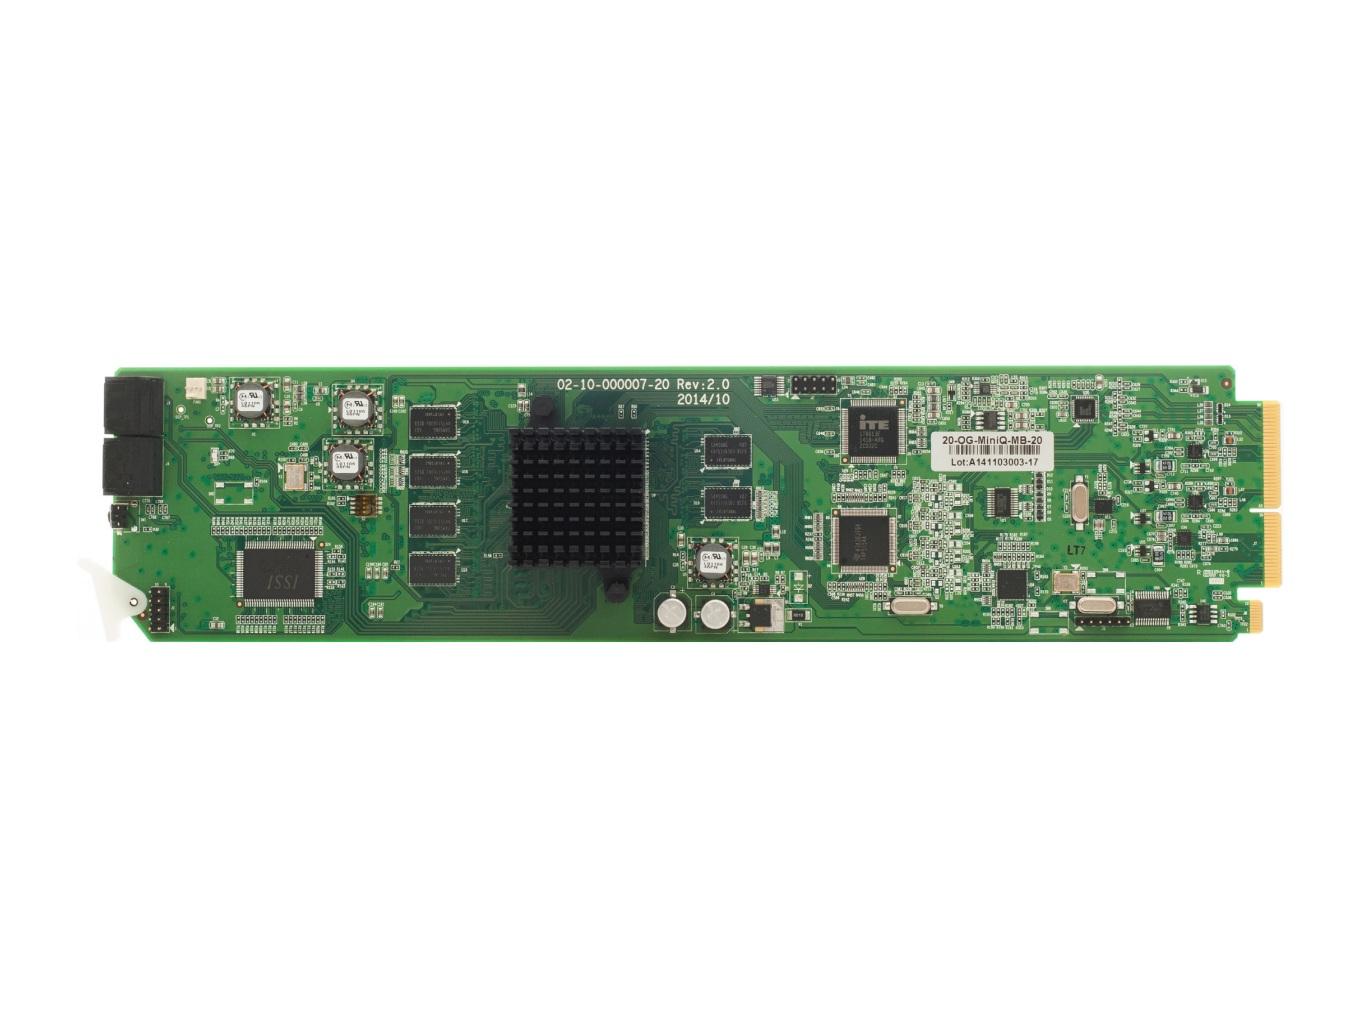 OG-Pinnacle-C-MB openGear 3G/HD/SD-SDI to HDMI Converter Card by Apantac